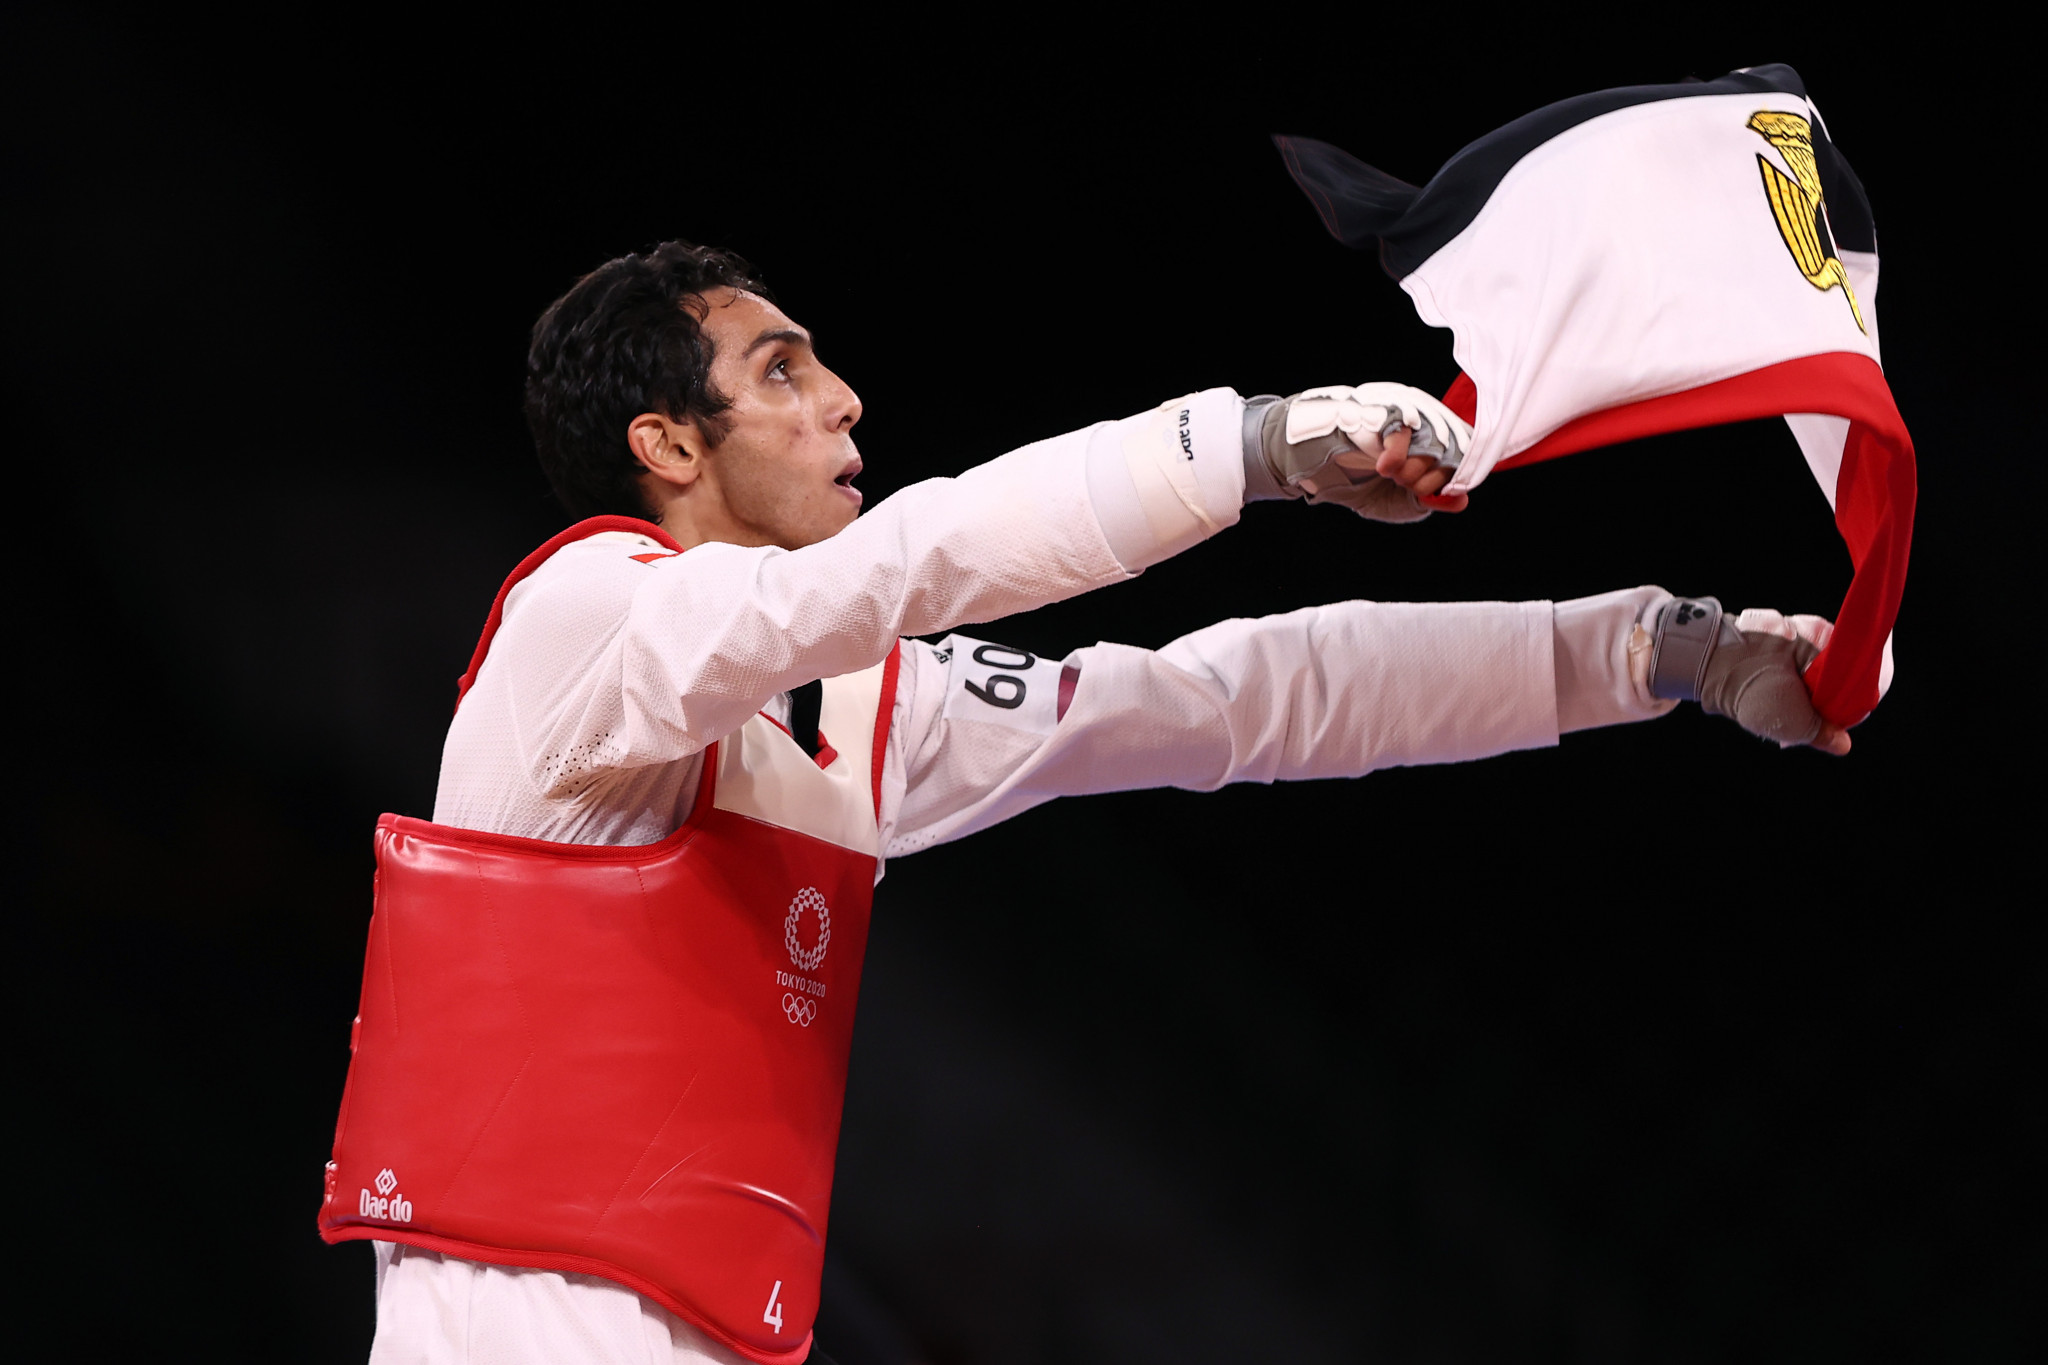 Egyptian taekwondo star Eissa congratulated for reaching world number one